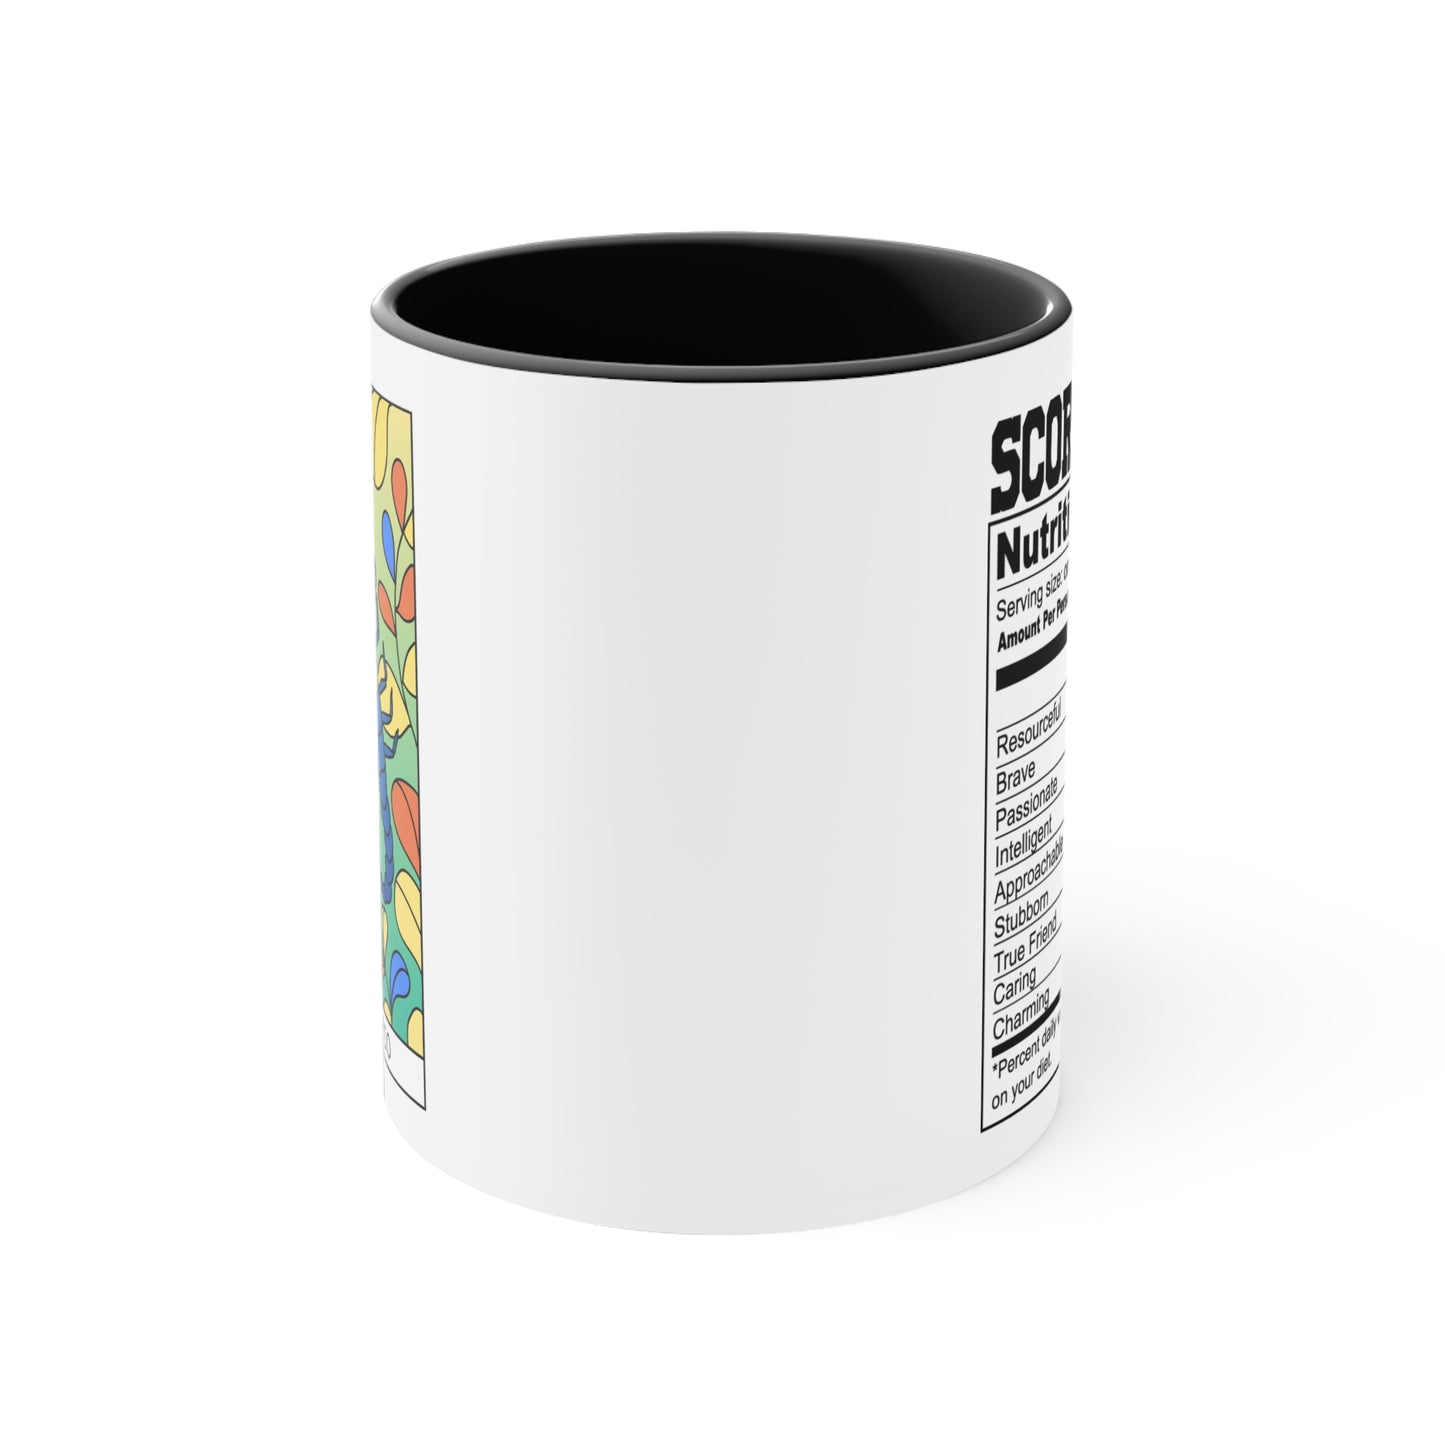 Scorpio Tarot Card Coffee Mug - Double Sided Black Accent Ceramic 11oz by TheGlassyLass.com